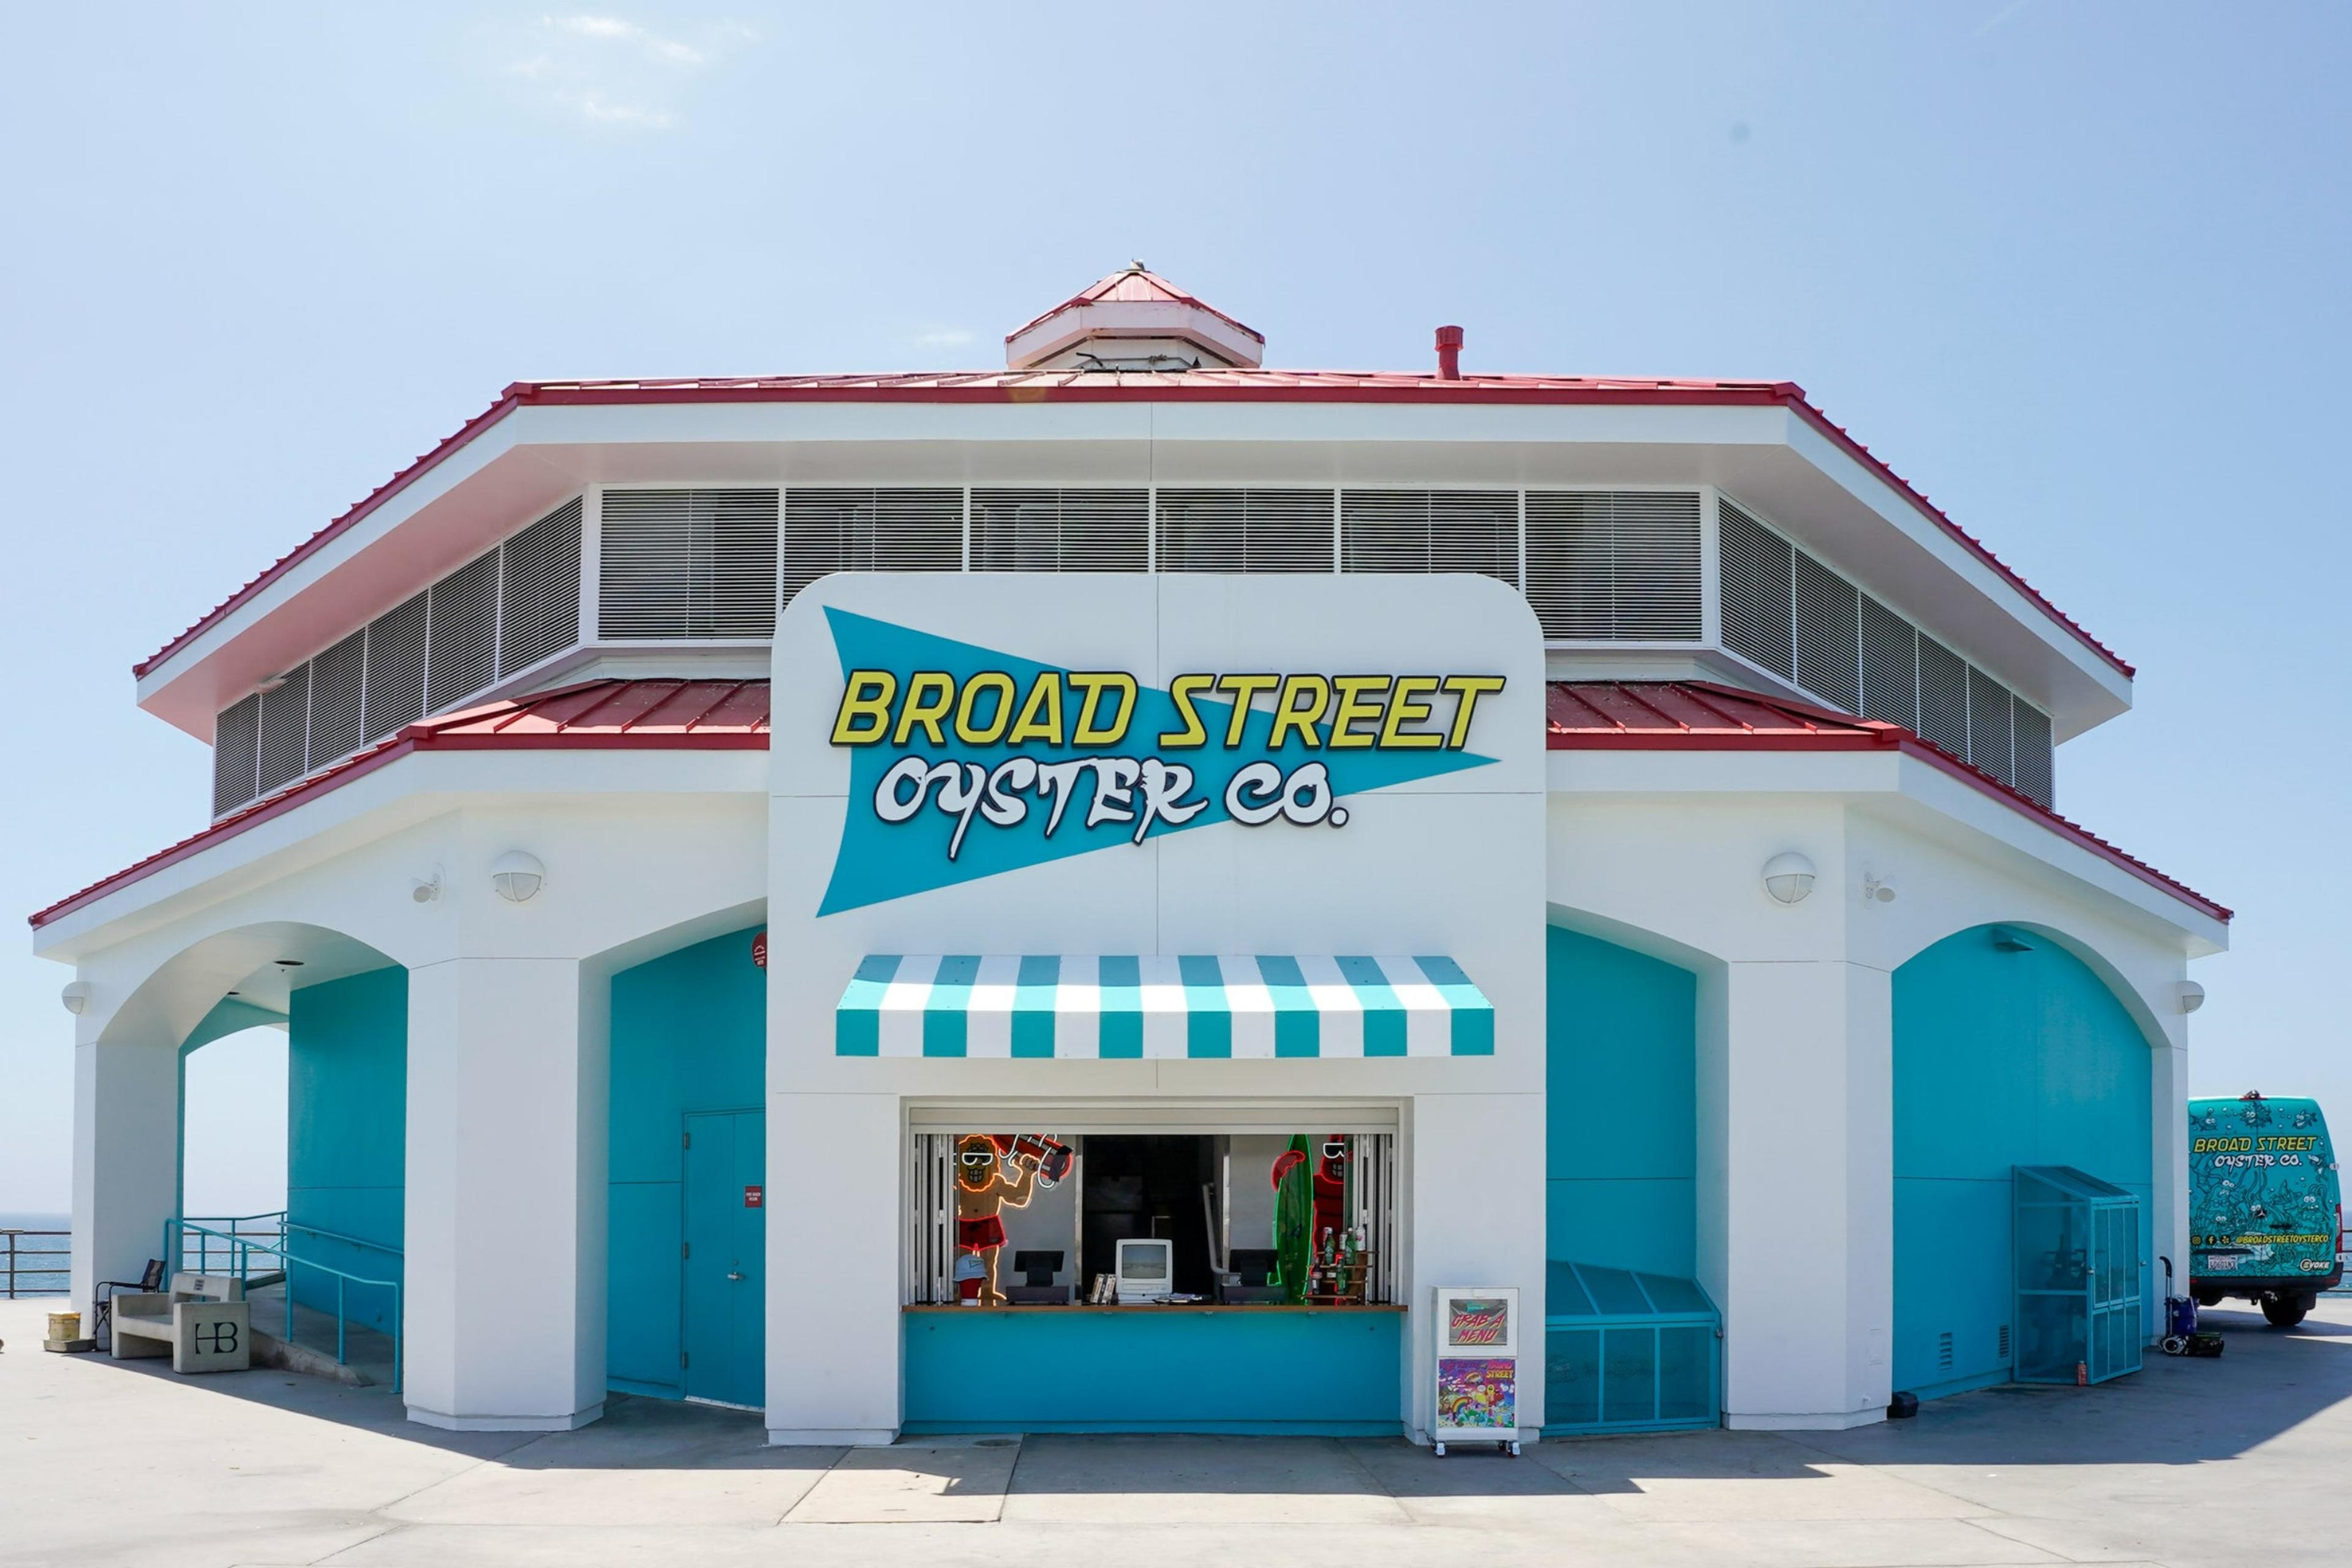 Broad Street Oyster Company - Huntington Beach Pier